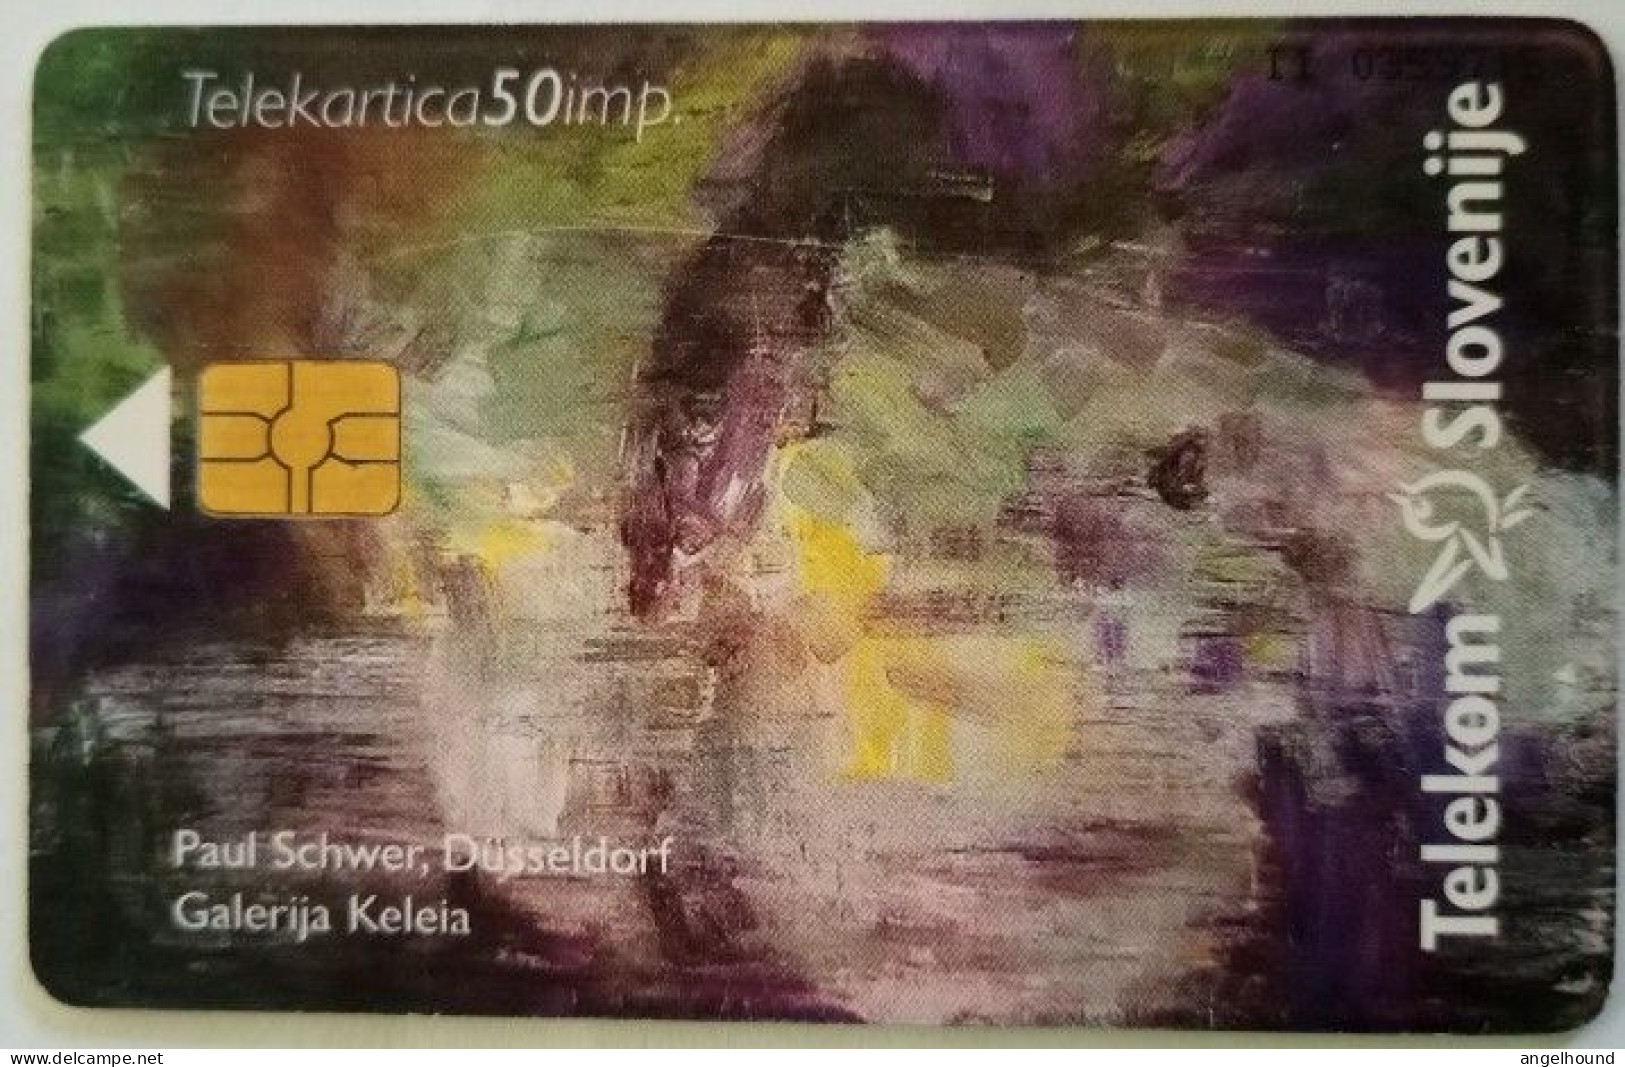 Slovenia 50 Unit Chip Card - Paul Schwer / Dusseldorf Galerija Kelera / Zdruzenje Sloven - Slovenia